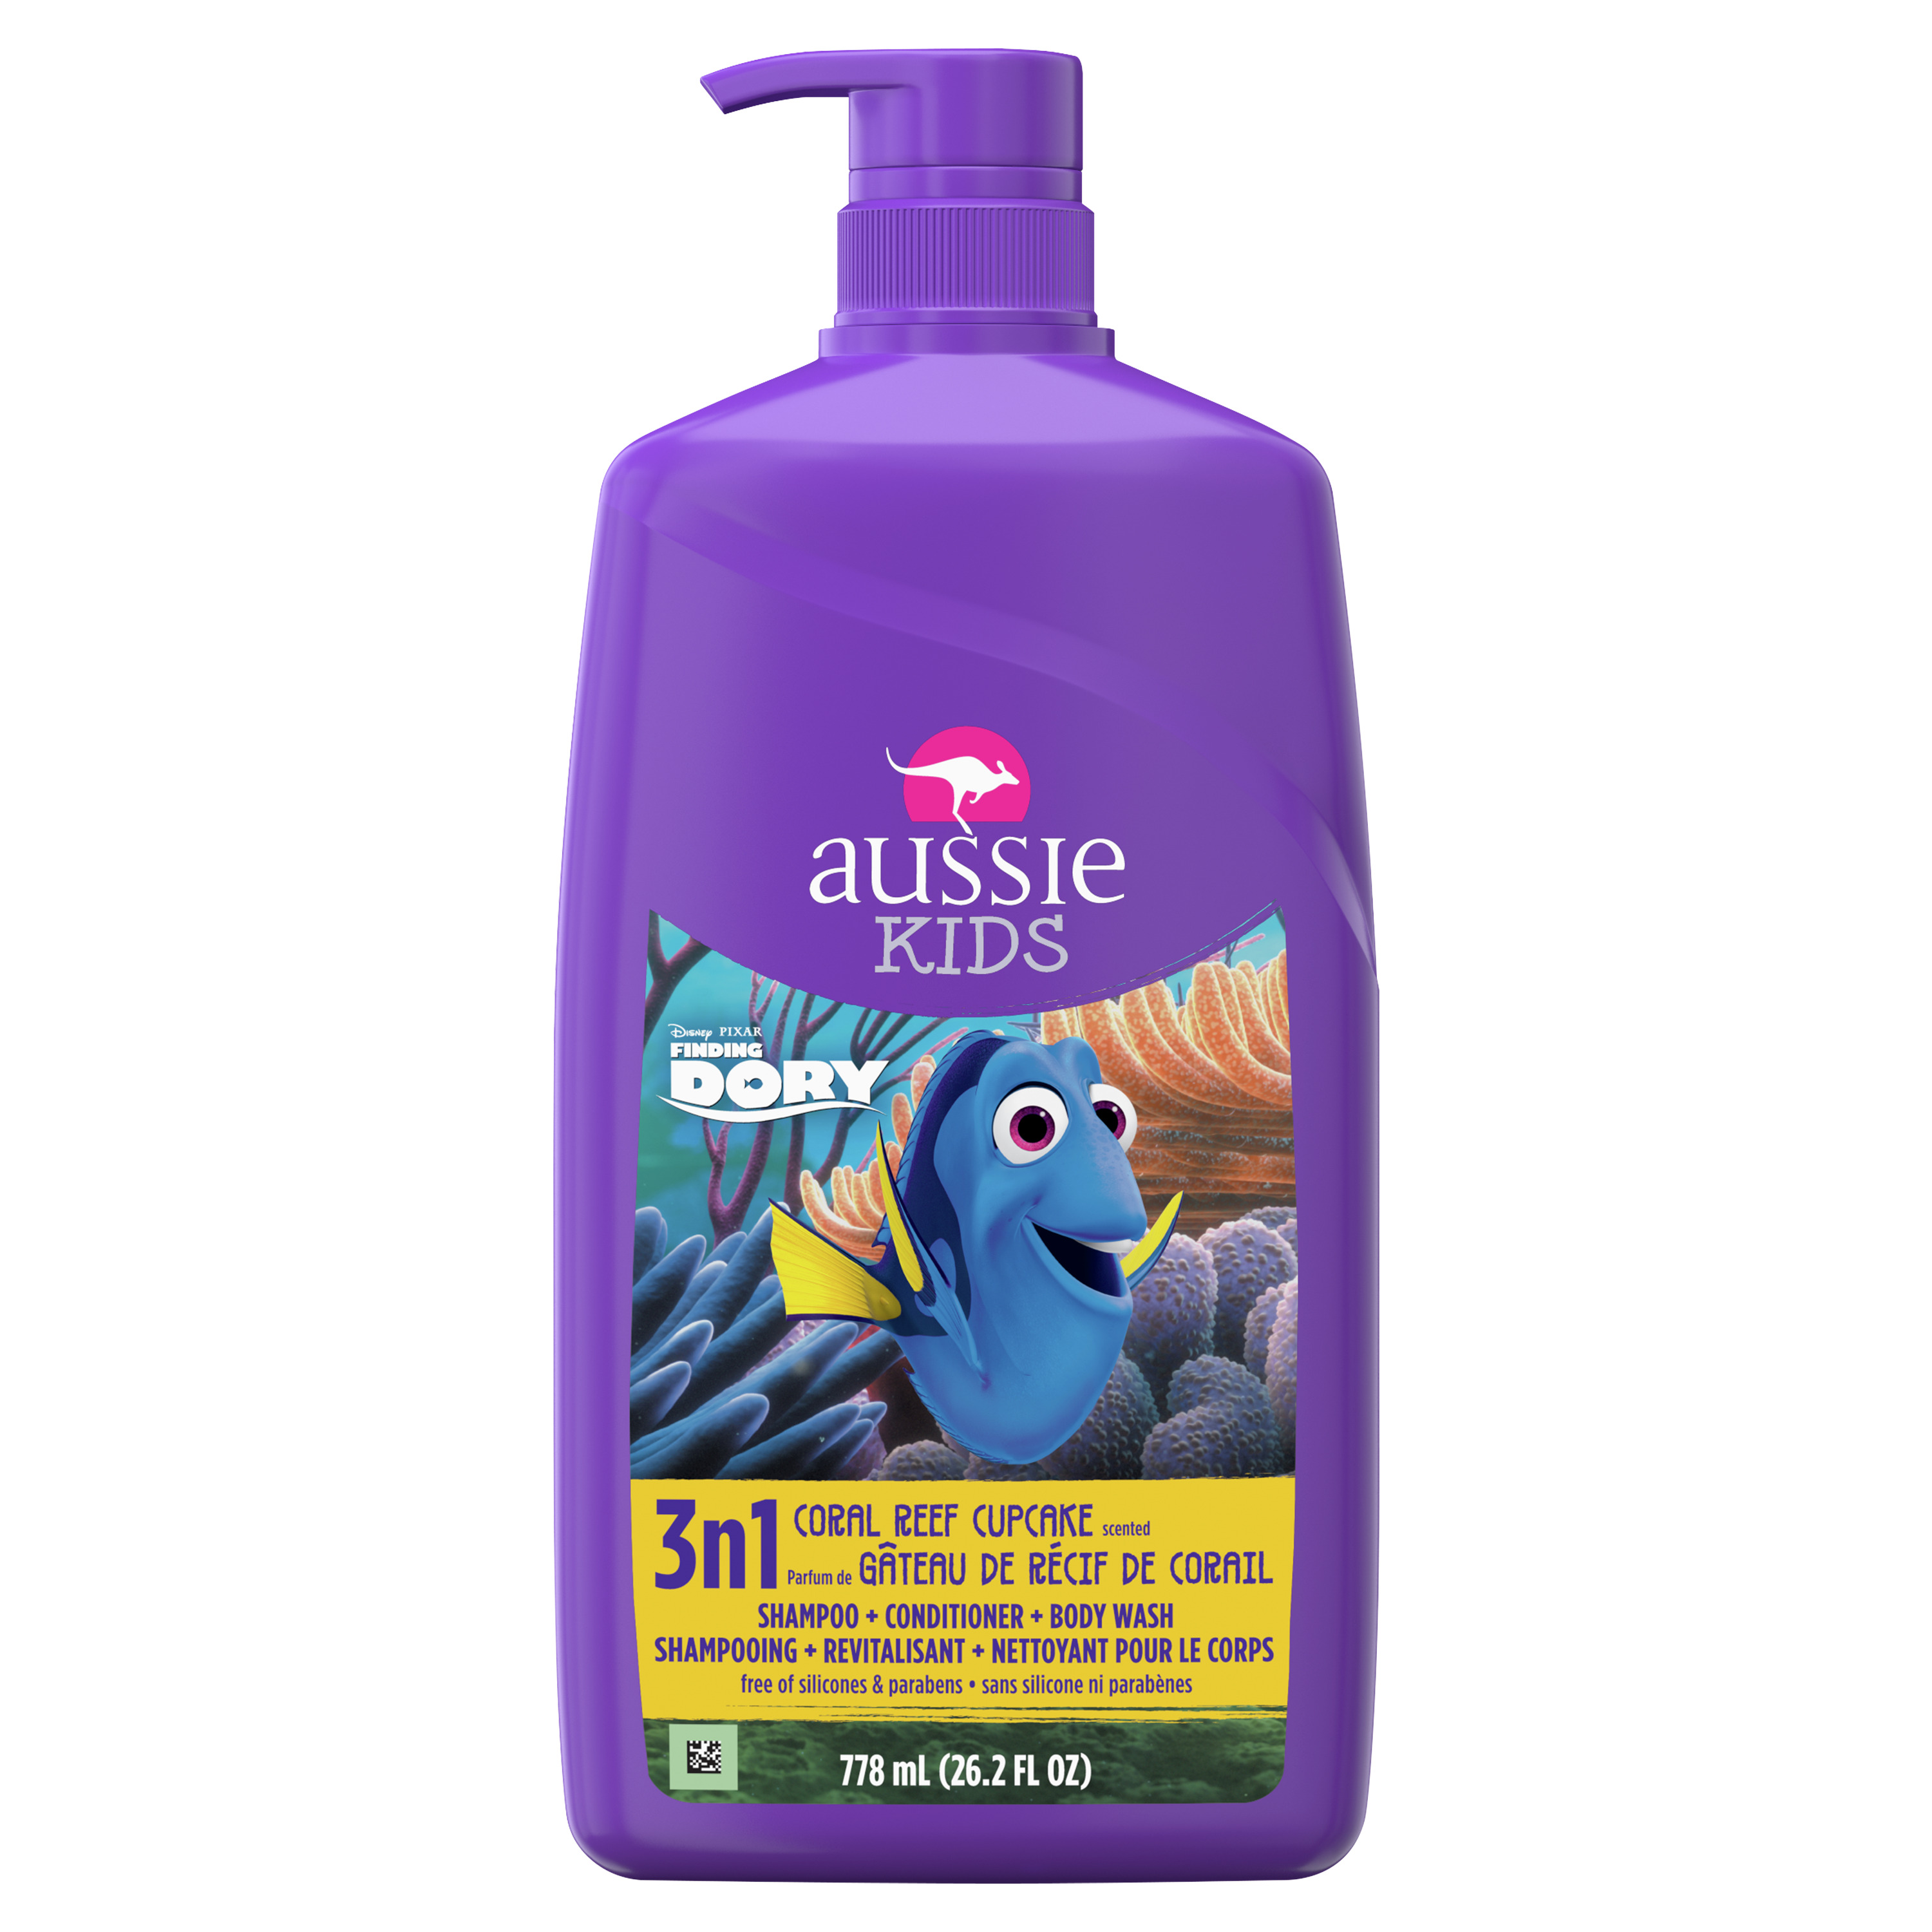 Aussie Kids Coral Reef 3in1 Shampoo, Conditioner, Body Wash, 26.2 oz - image 1 of 6